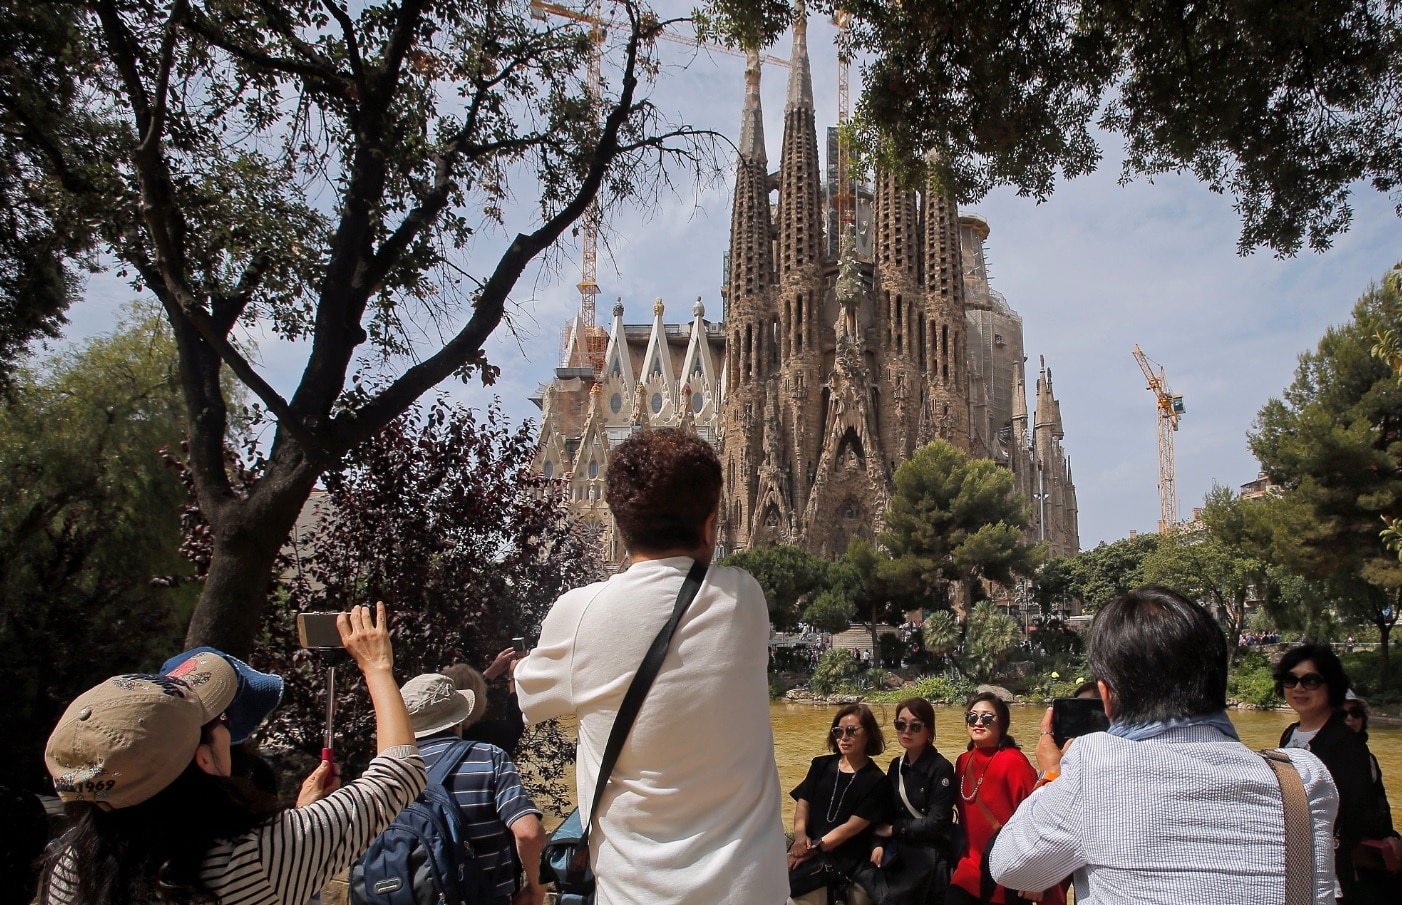 File: Tourists take pictures in front of Sagrada Familia church, designed by architect Antoni Gaudi in Barcelona.